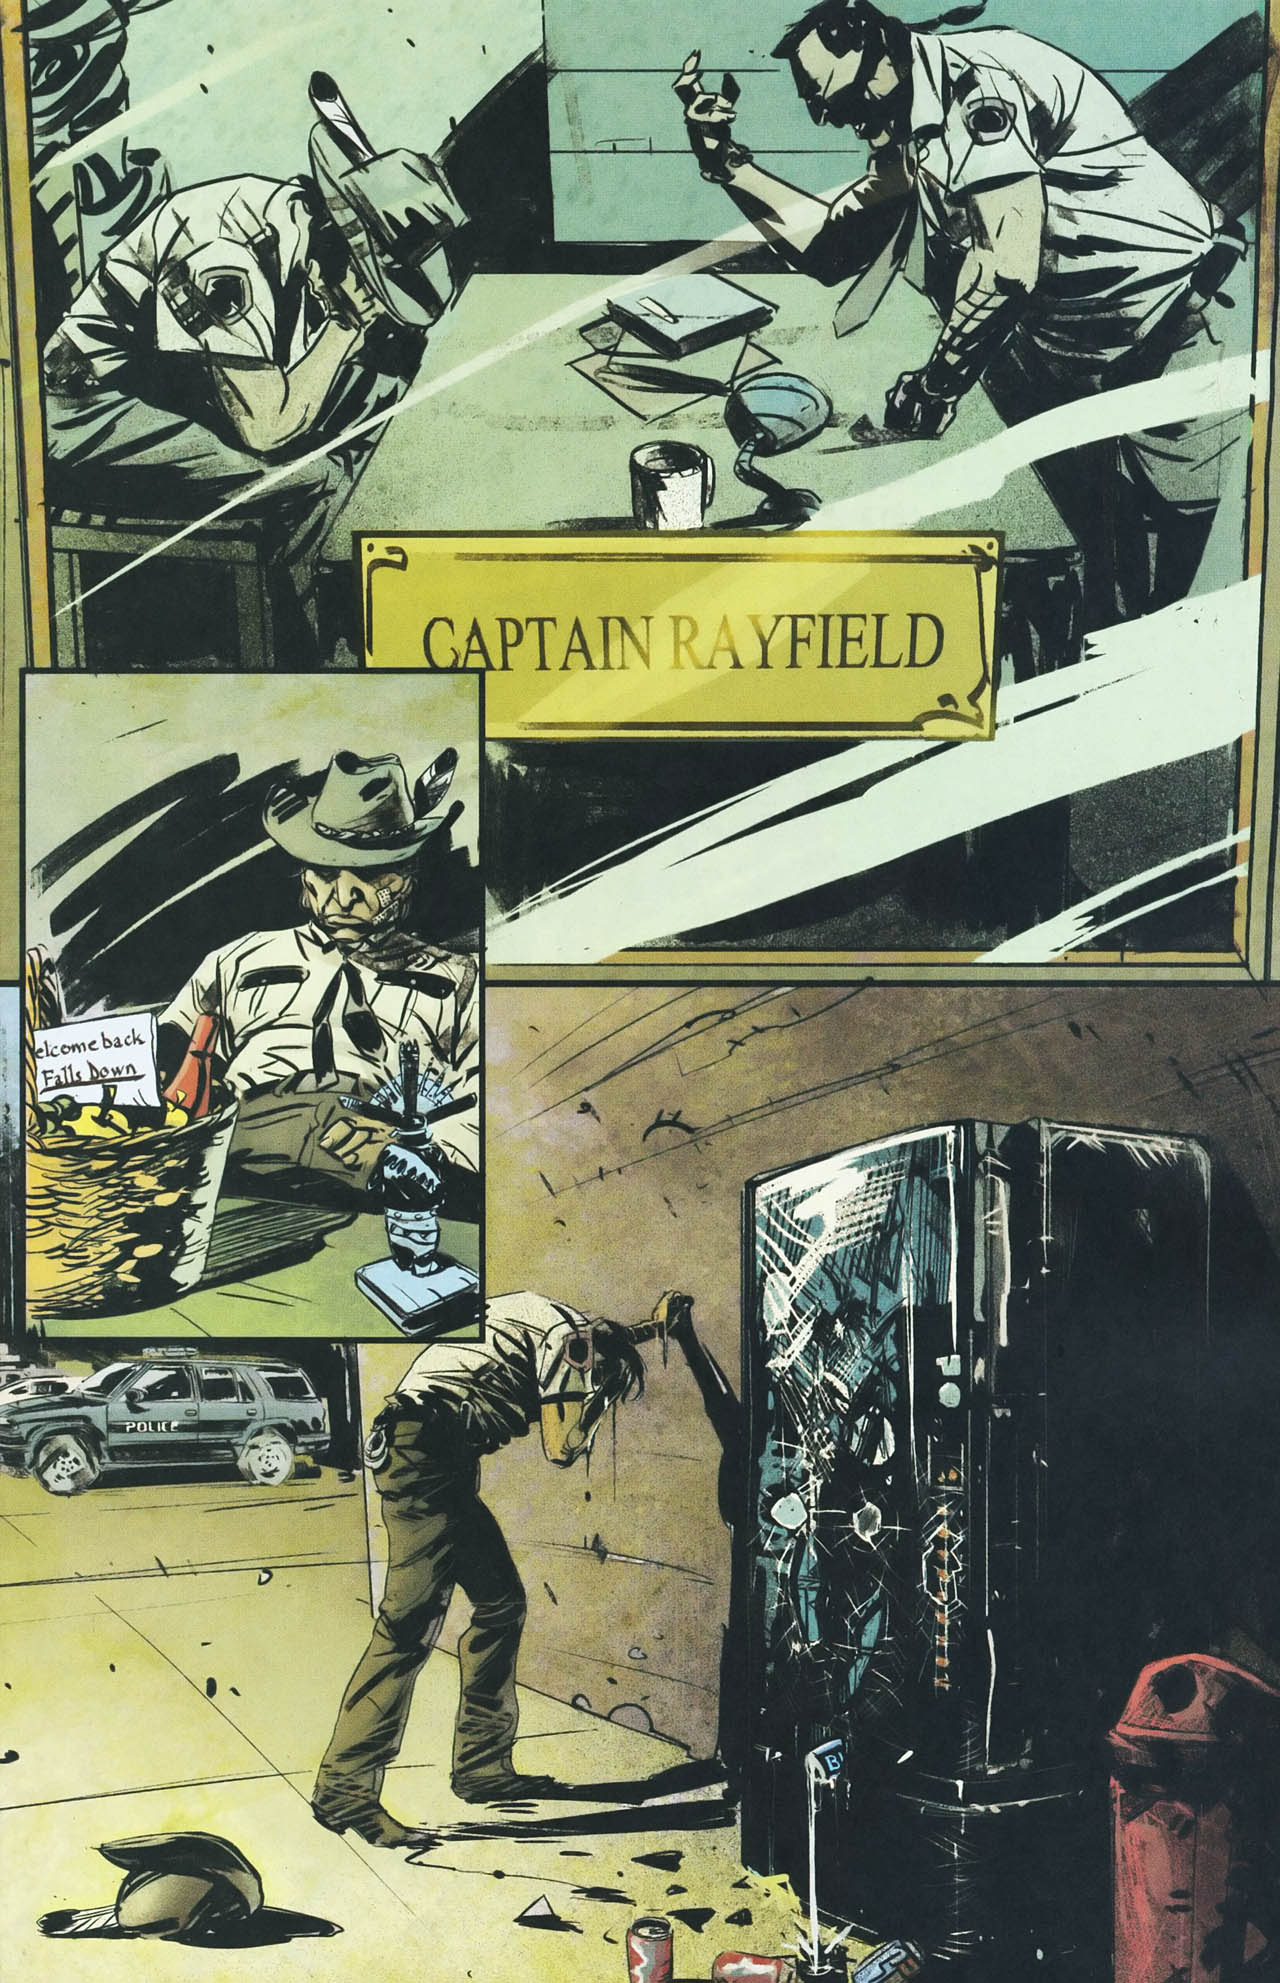 comic book - Captain Rayfield